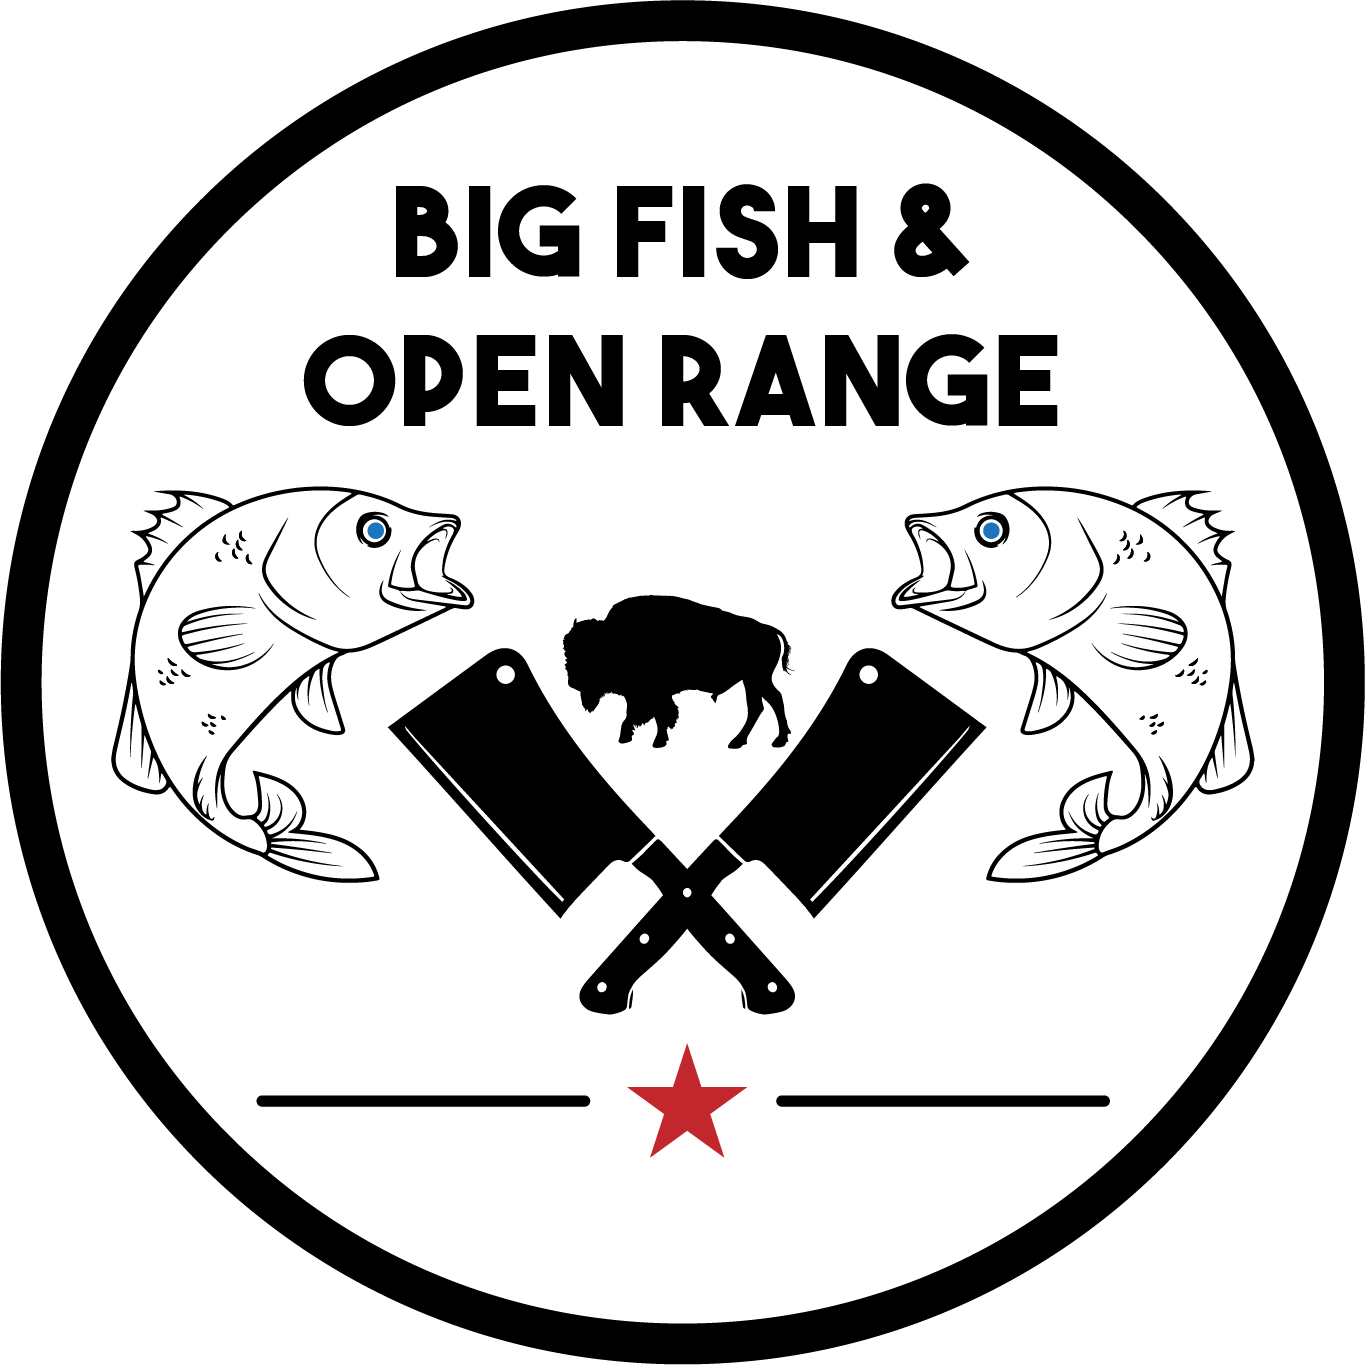 Big Fish & Open Range - Marda Loop Location